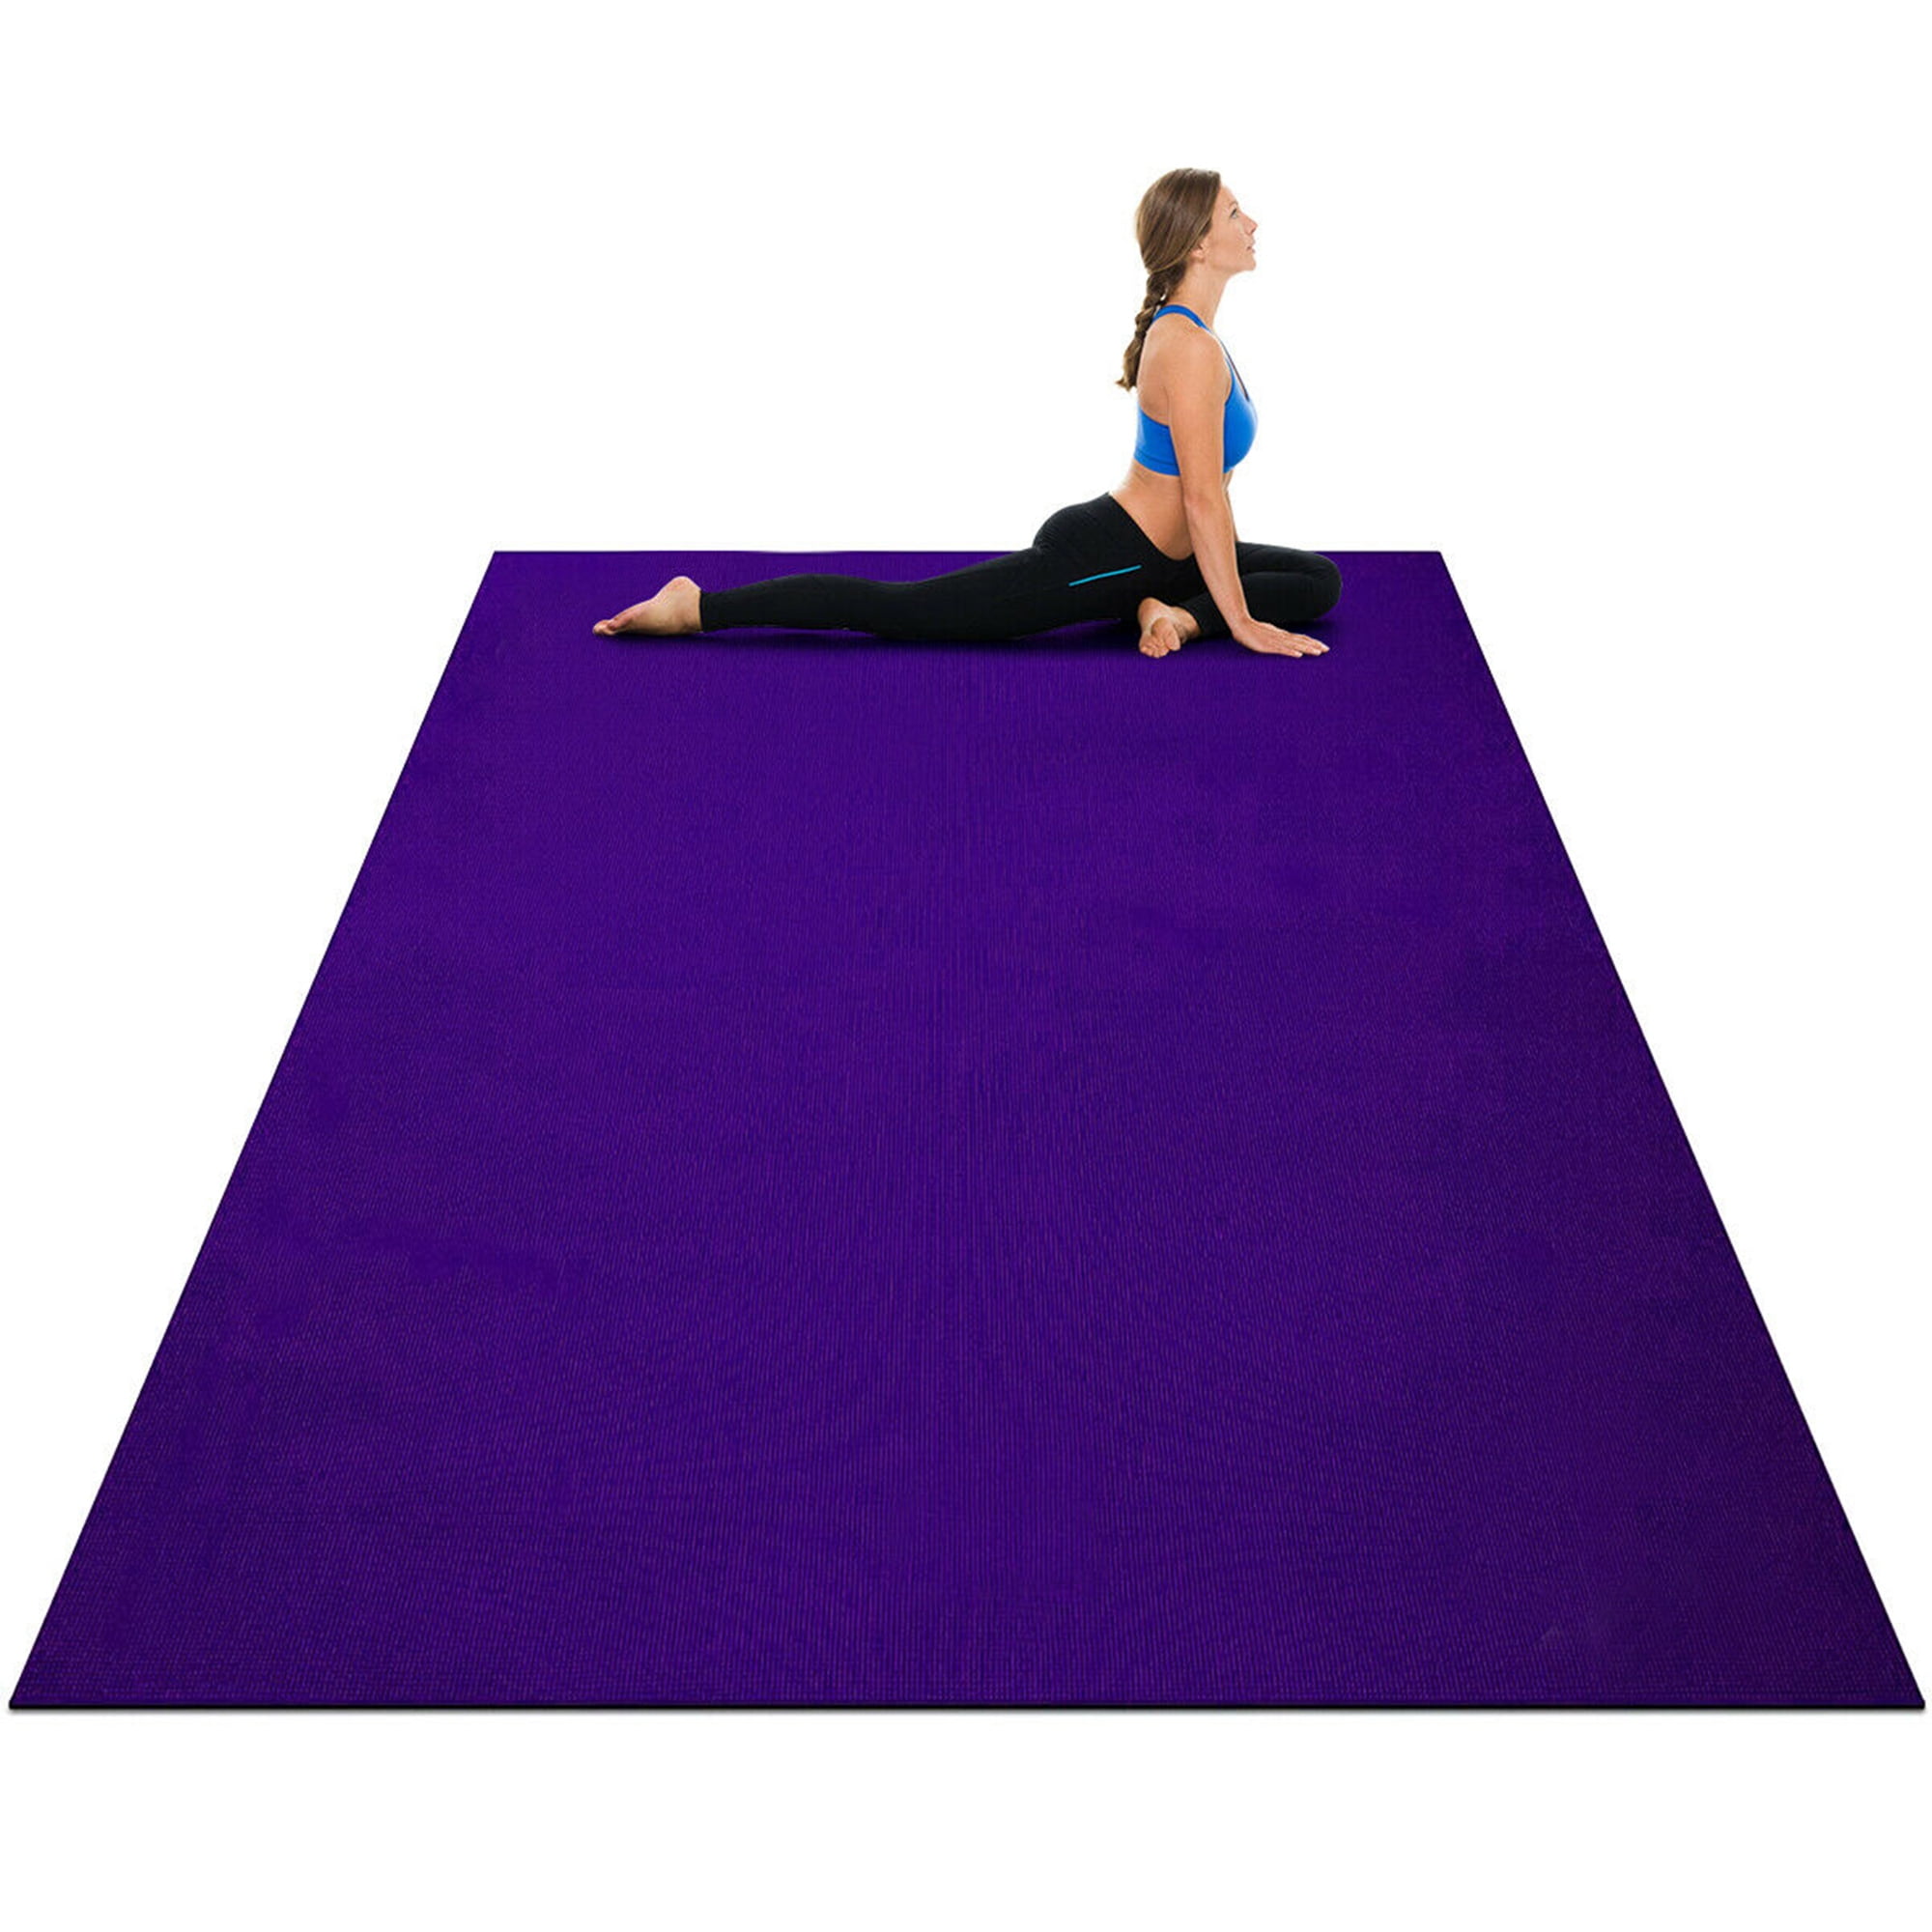 Extra Wide Asana Tree Pro Grip Large Yoga Mat Sustainable Non Slip Purple 